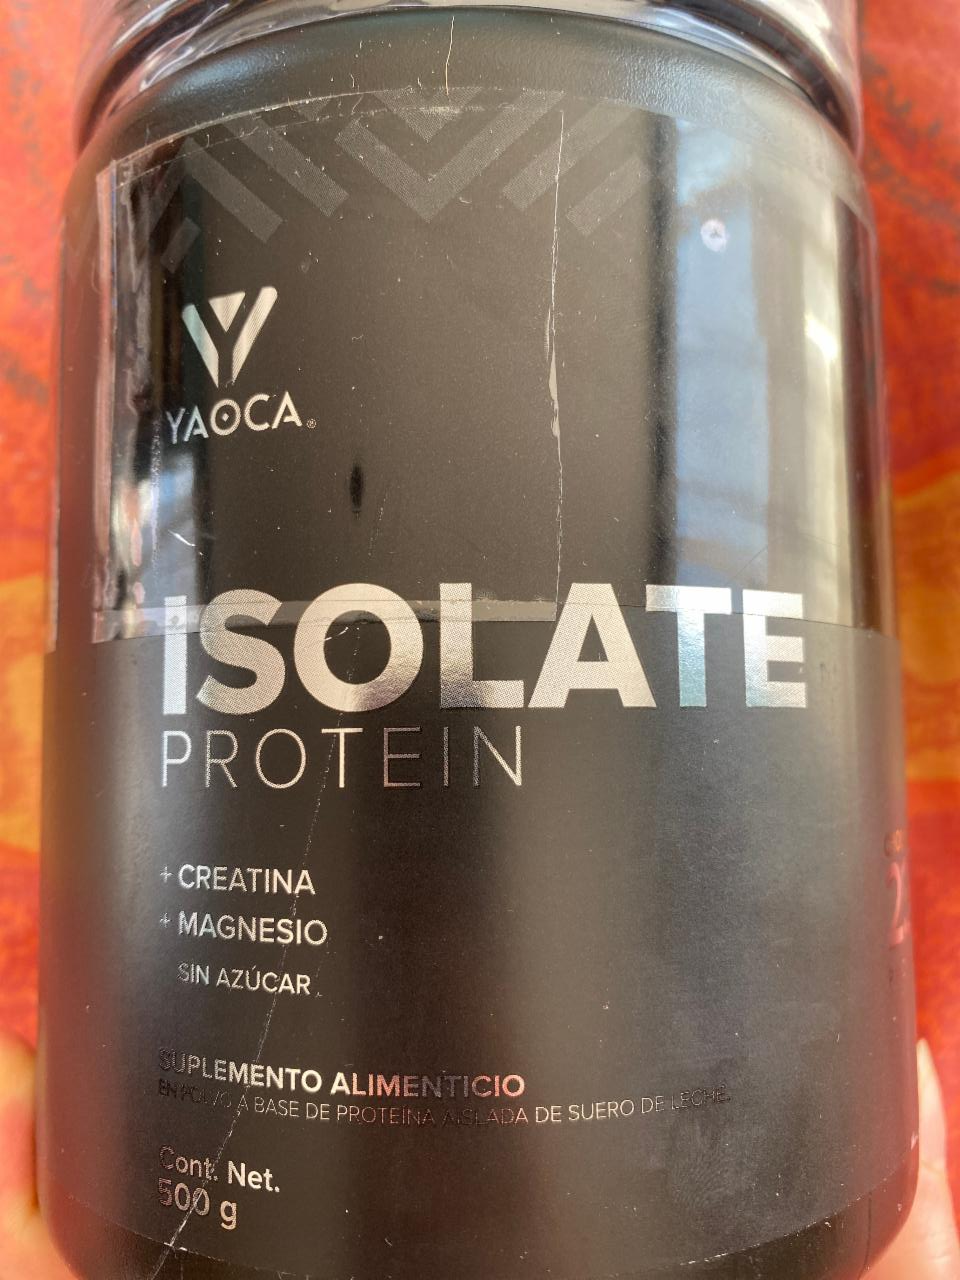 Fotografie - Isolate Protein chocolate Yaoca